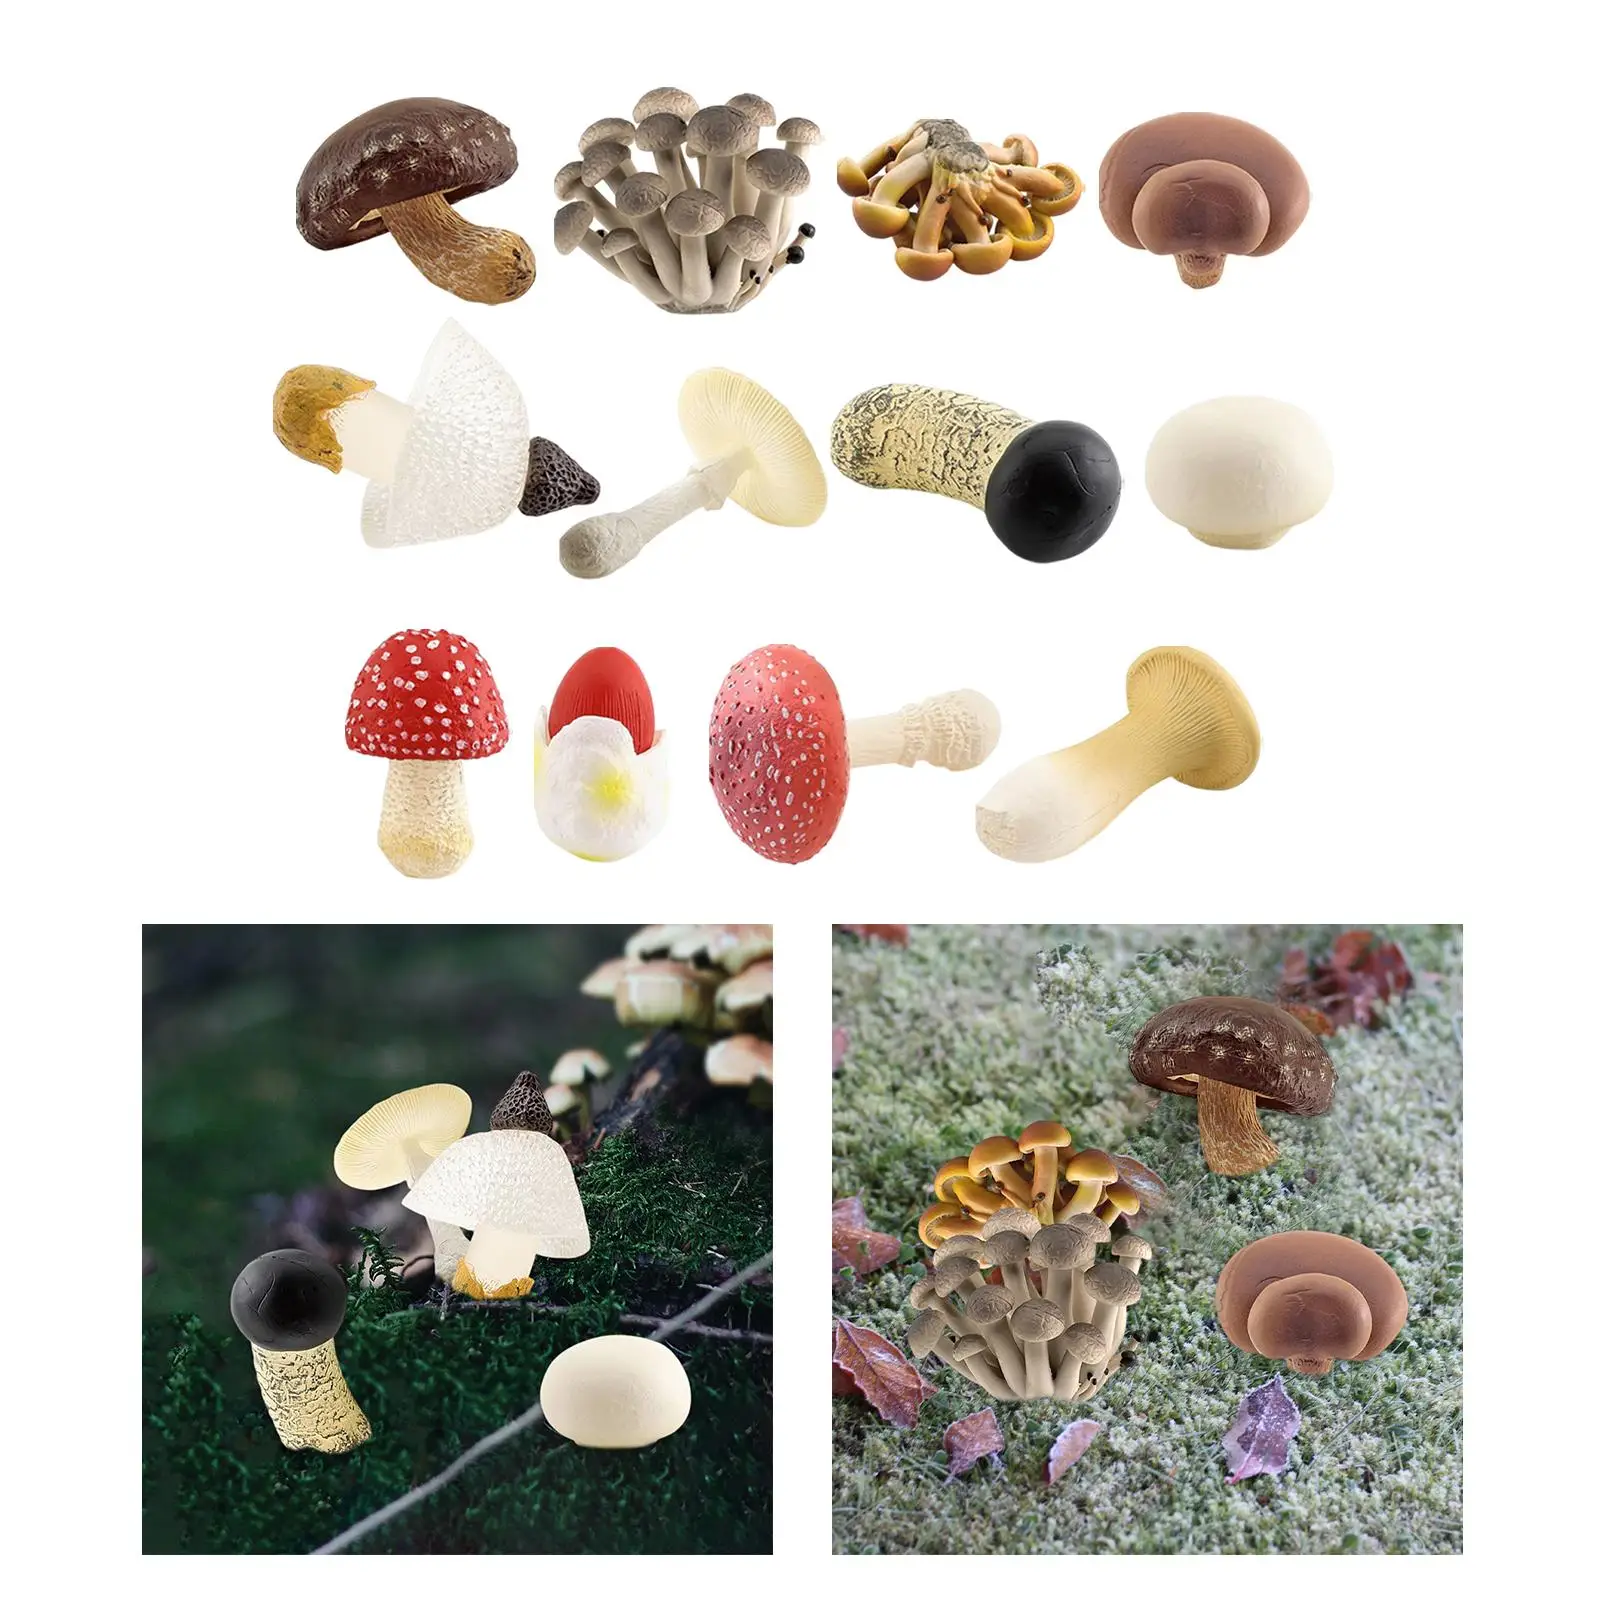 4 Pcs Mushroom Model Development Toys Collectible Decorations Educational